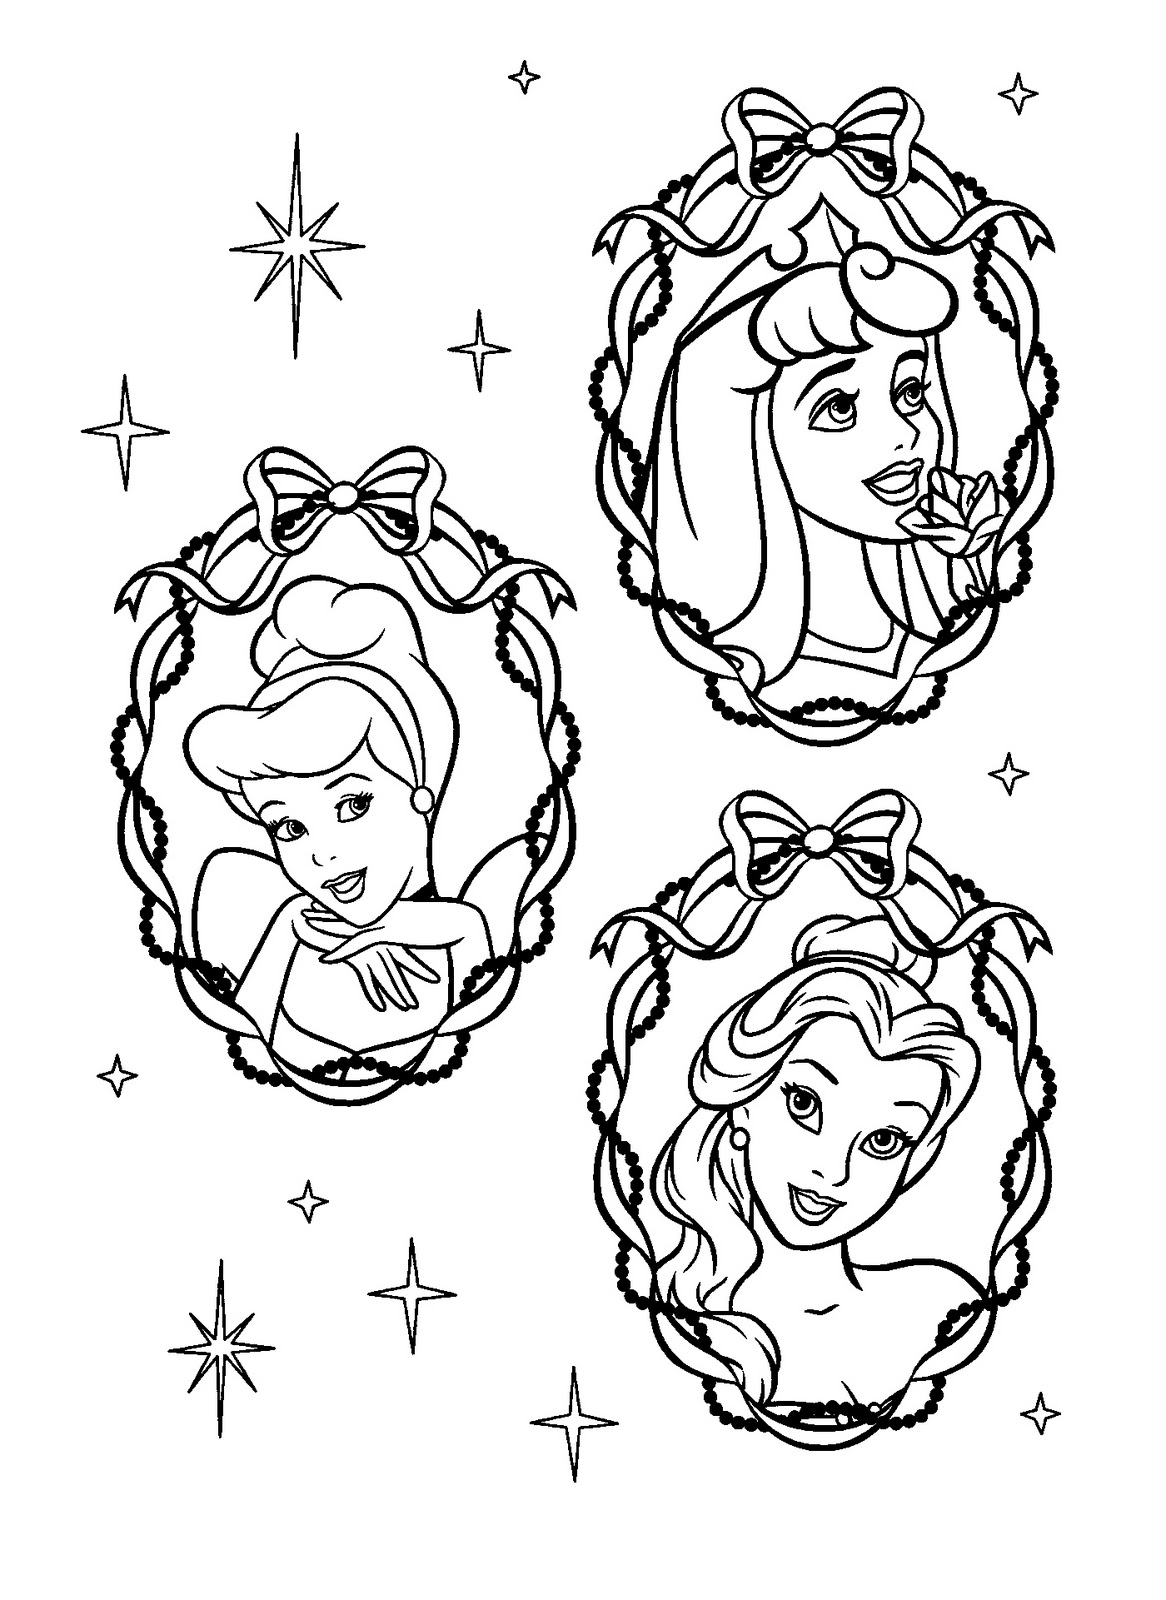 Free Printable Disney Princess Cutouts Printables